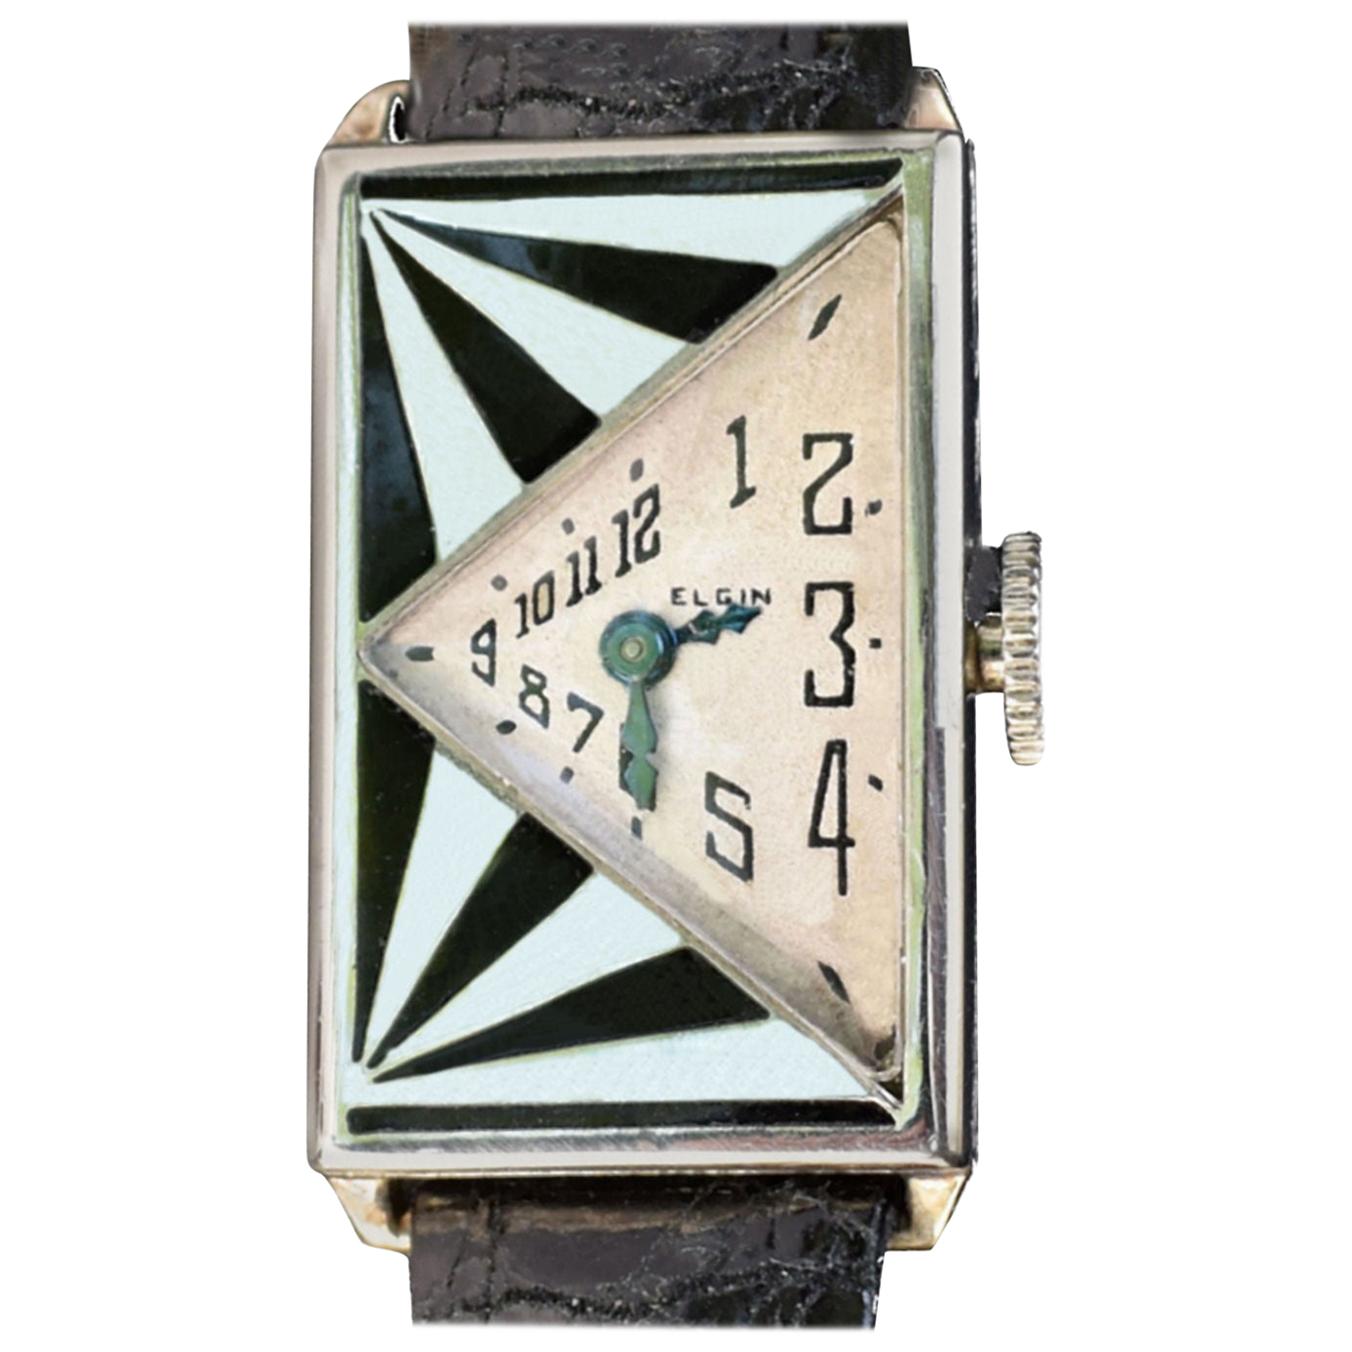 Original Art Deco 14 Karat Gold Ladies Wristwatch by Elgin, Serviced, circa 1930